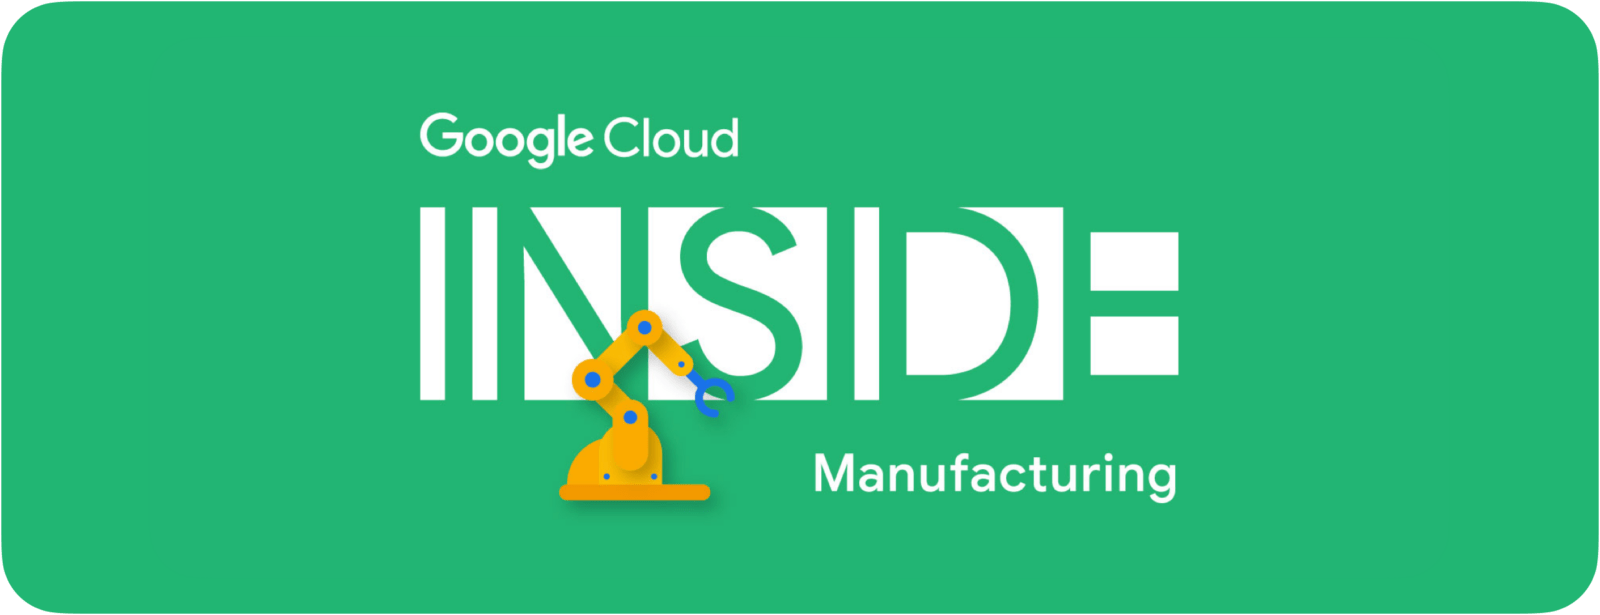 [GCP] Google Cloud INSIDE Manufacturing